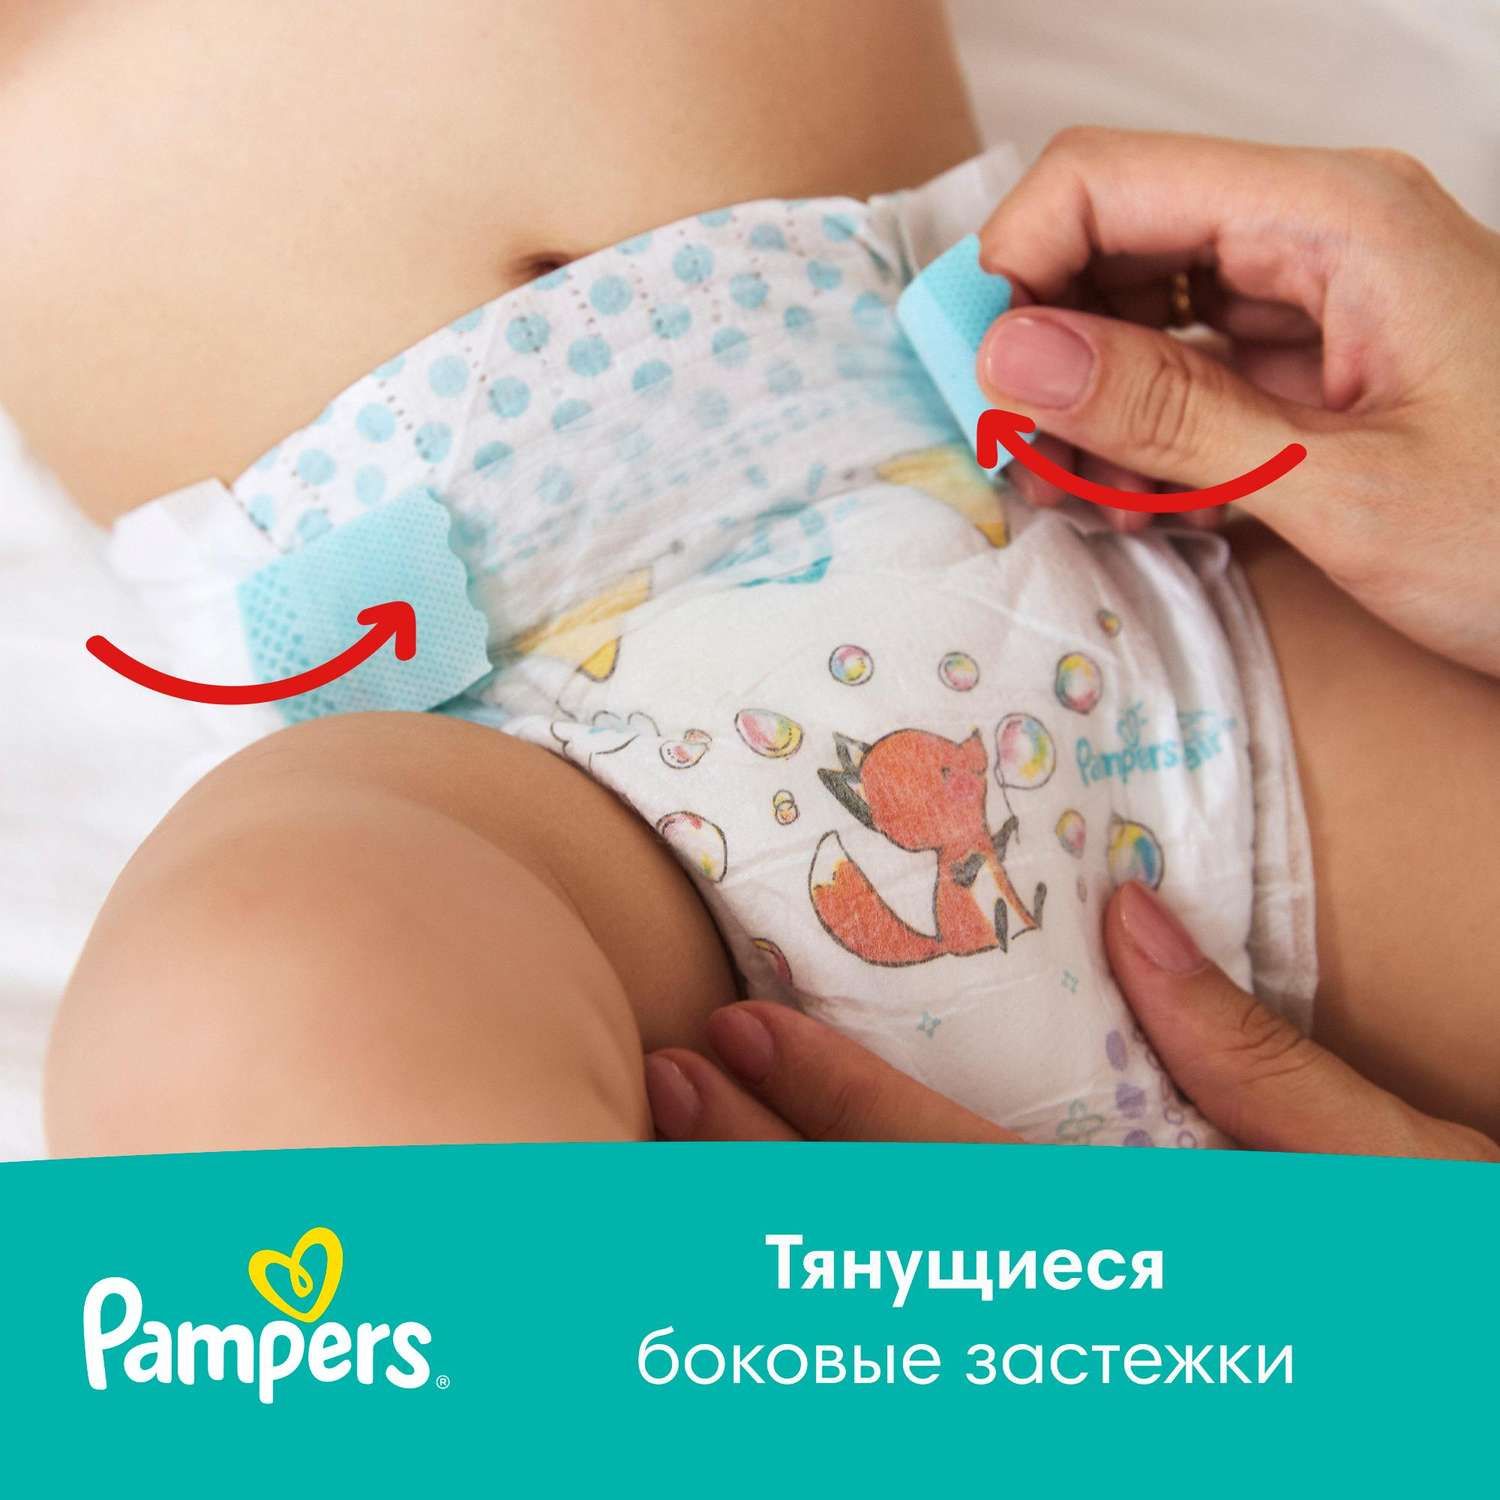 Подгузники Pampers New Baby-Dry 2 4-8кг 144шт - фото 2